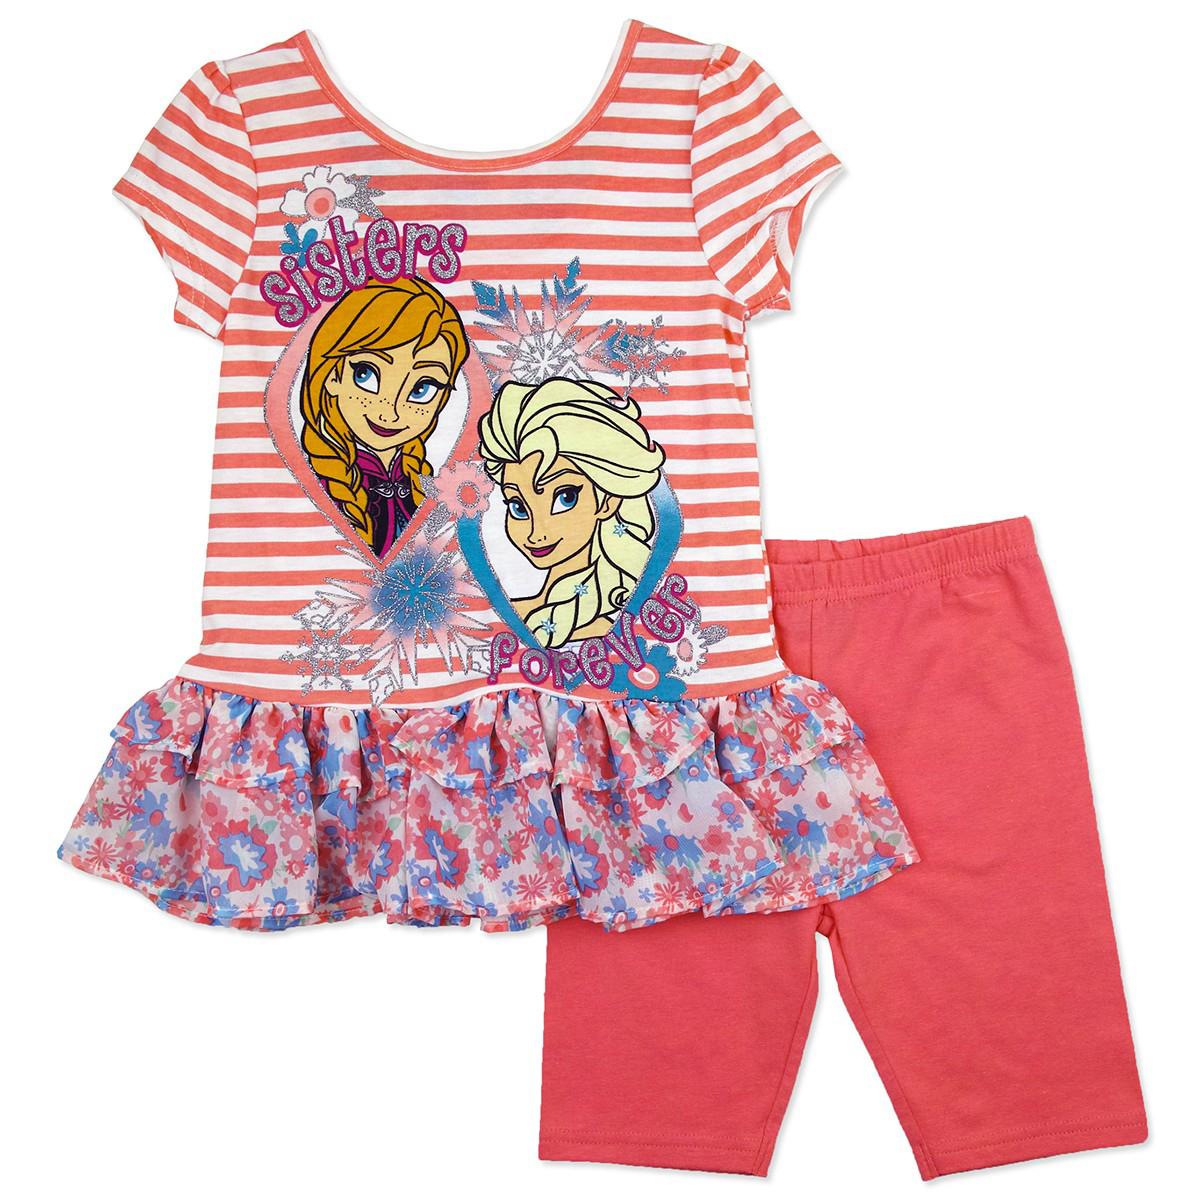 Disney Frozen Infant & Toddler Girl's Top & Shorts - Striped